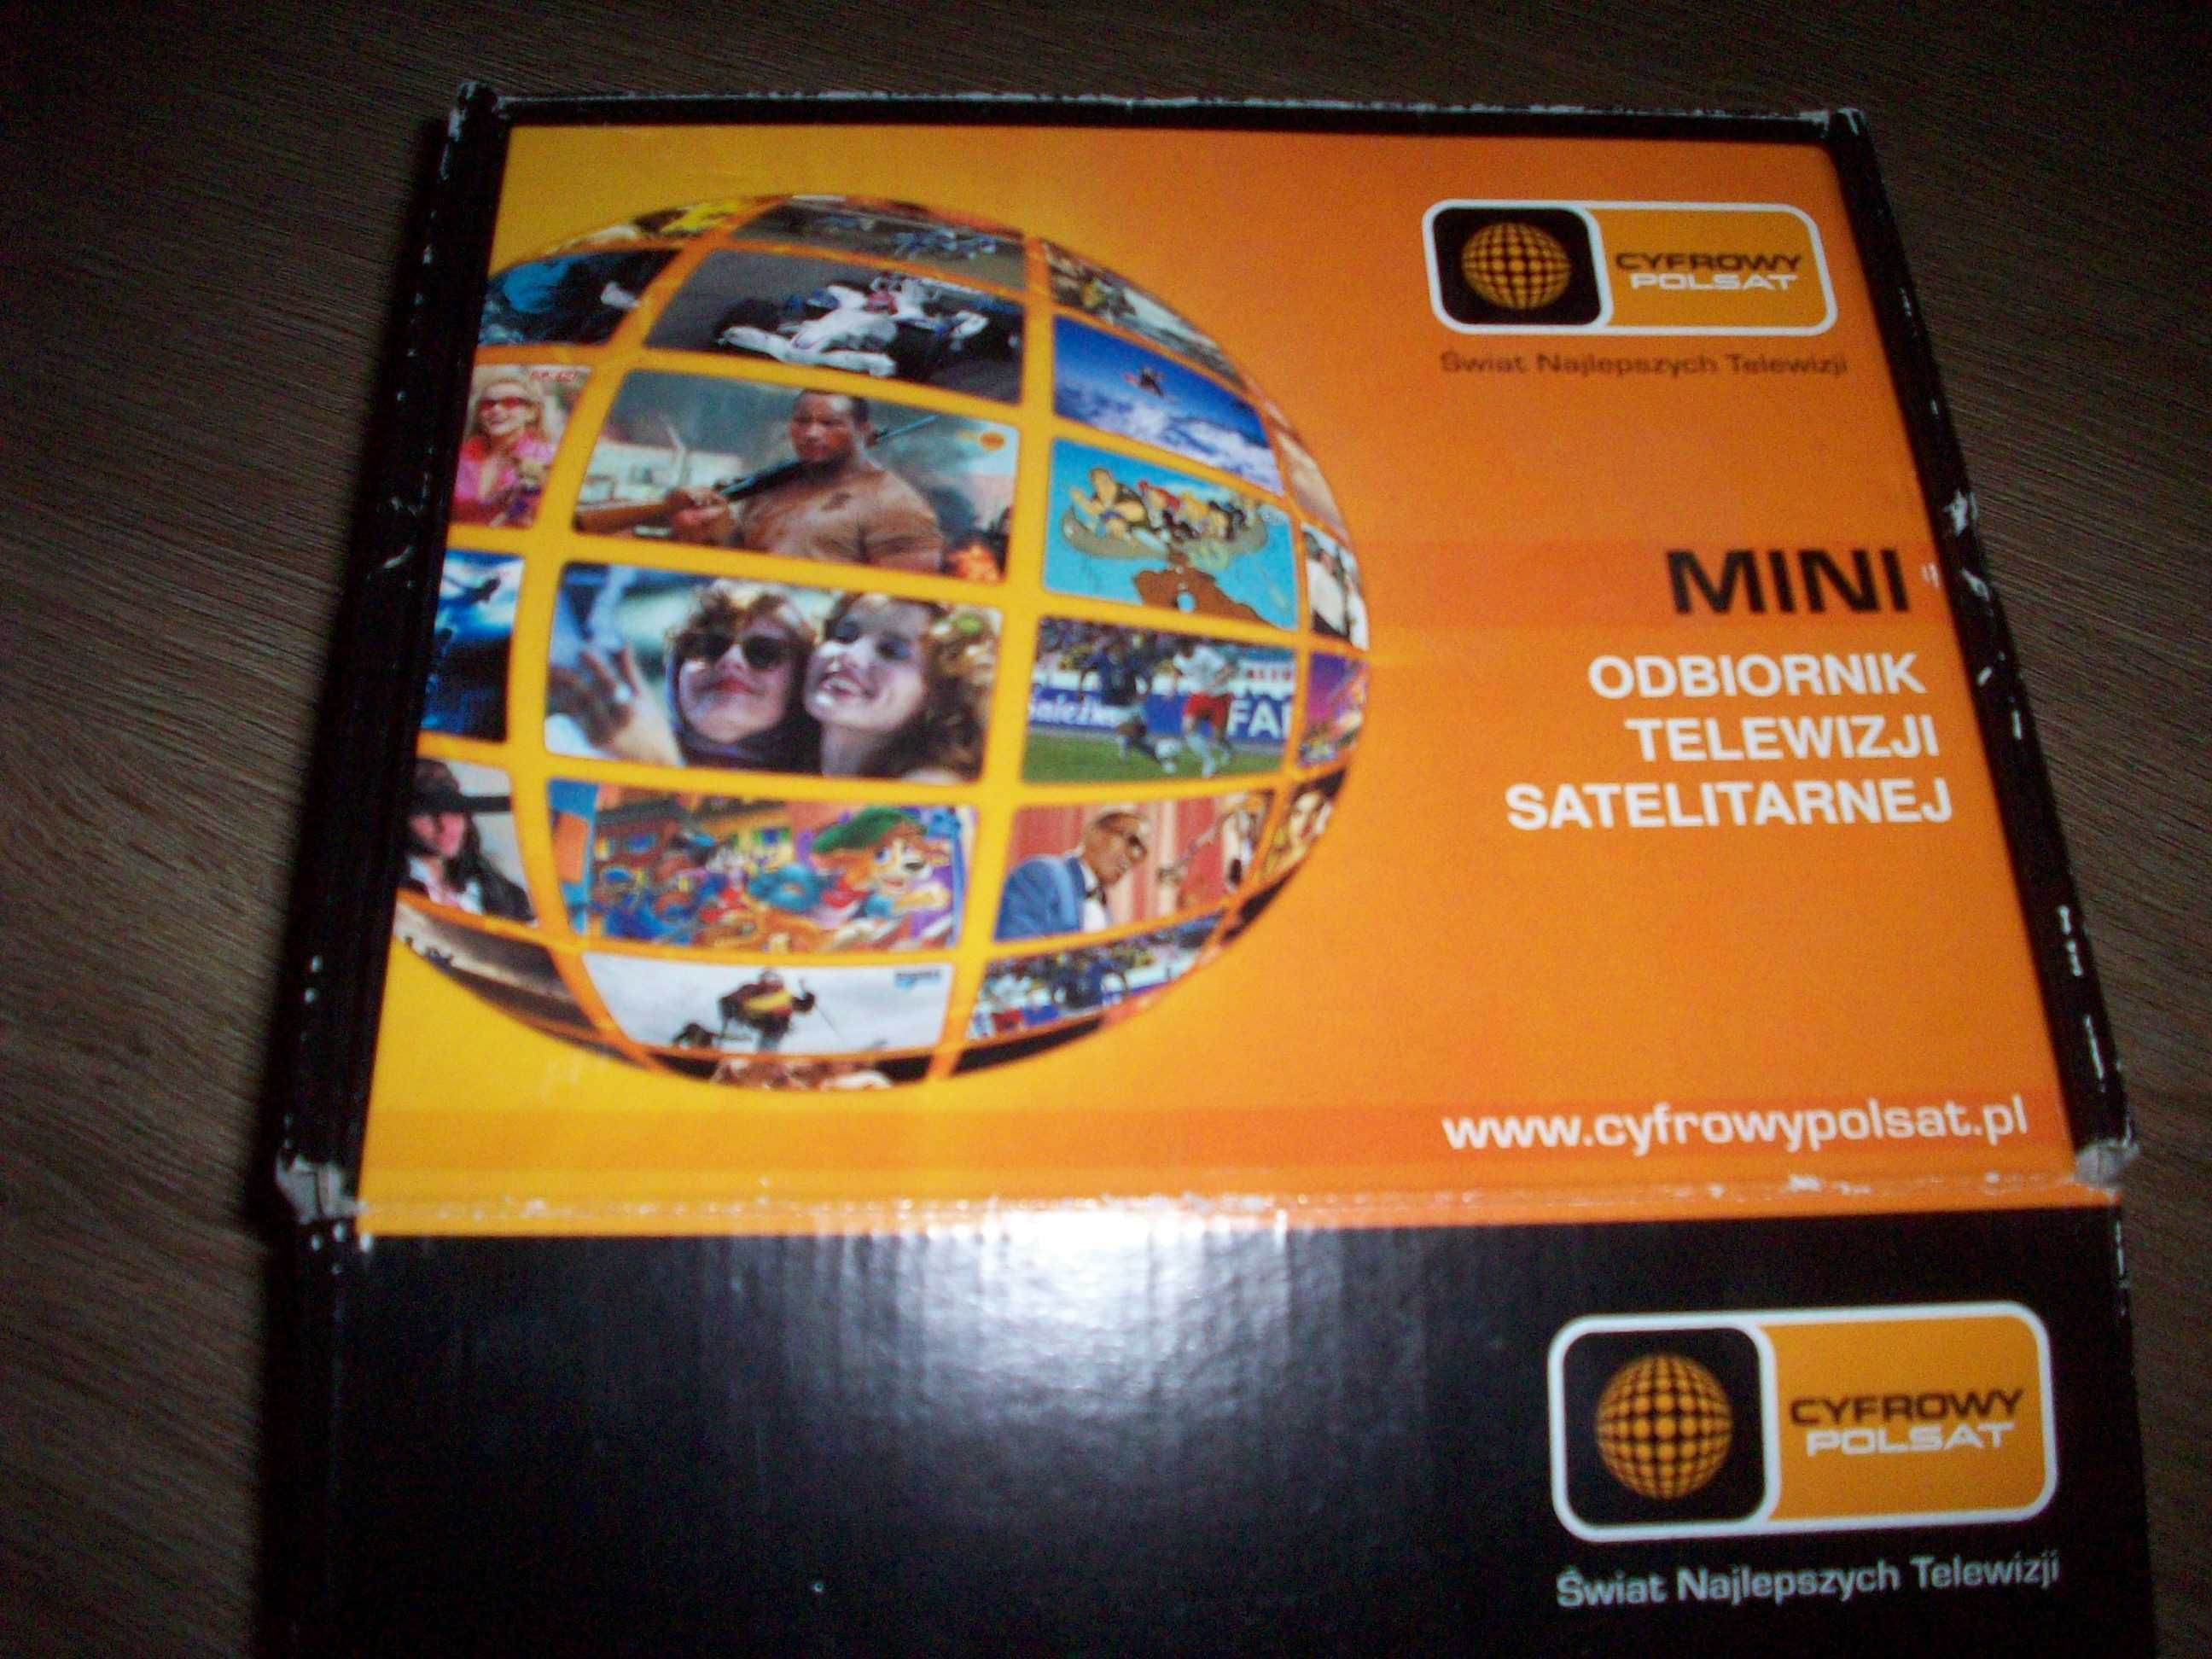 dekoder telewizji satelitarnej tuner mini cyfrowy polsat